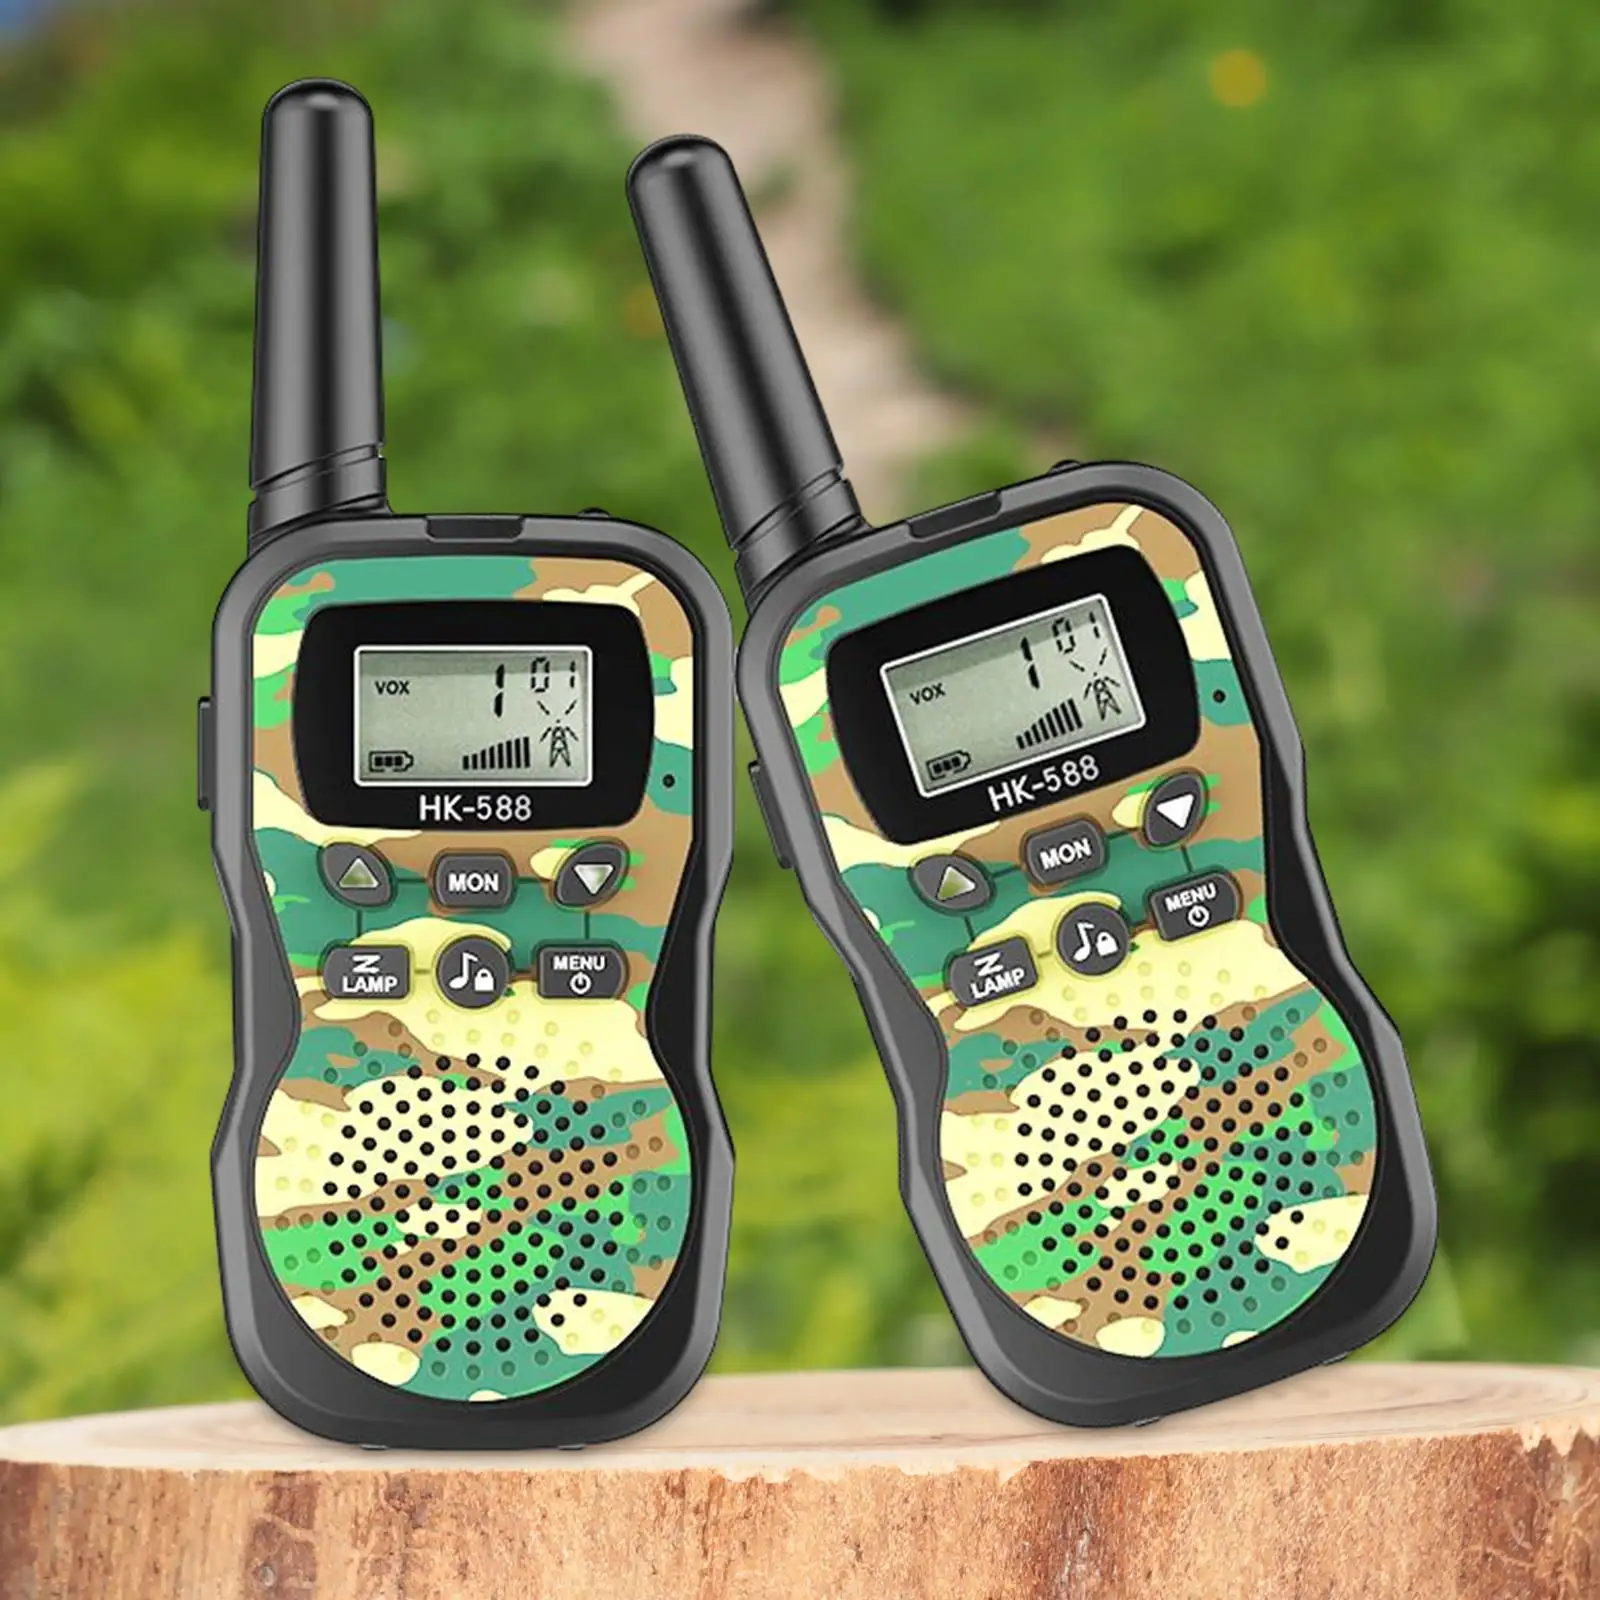 Outdoor Kids Walkie Talkies Toy 2 Way Radios Children Toy Durable for Indoor Games or Outdoor Activities with Backlit LCD